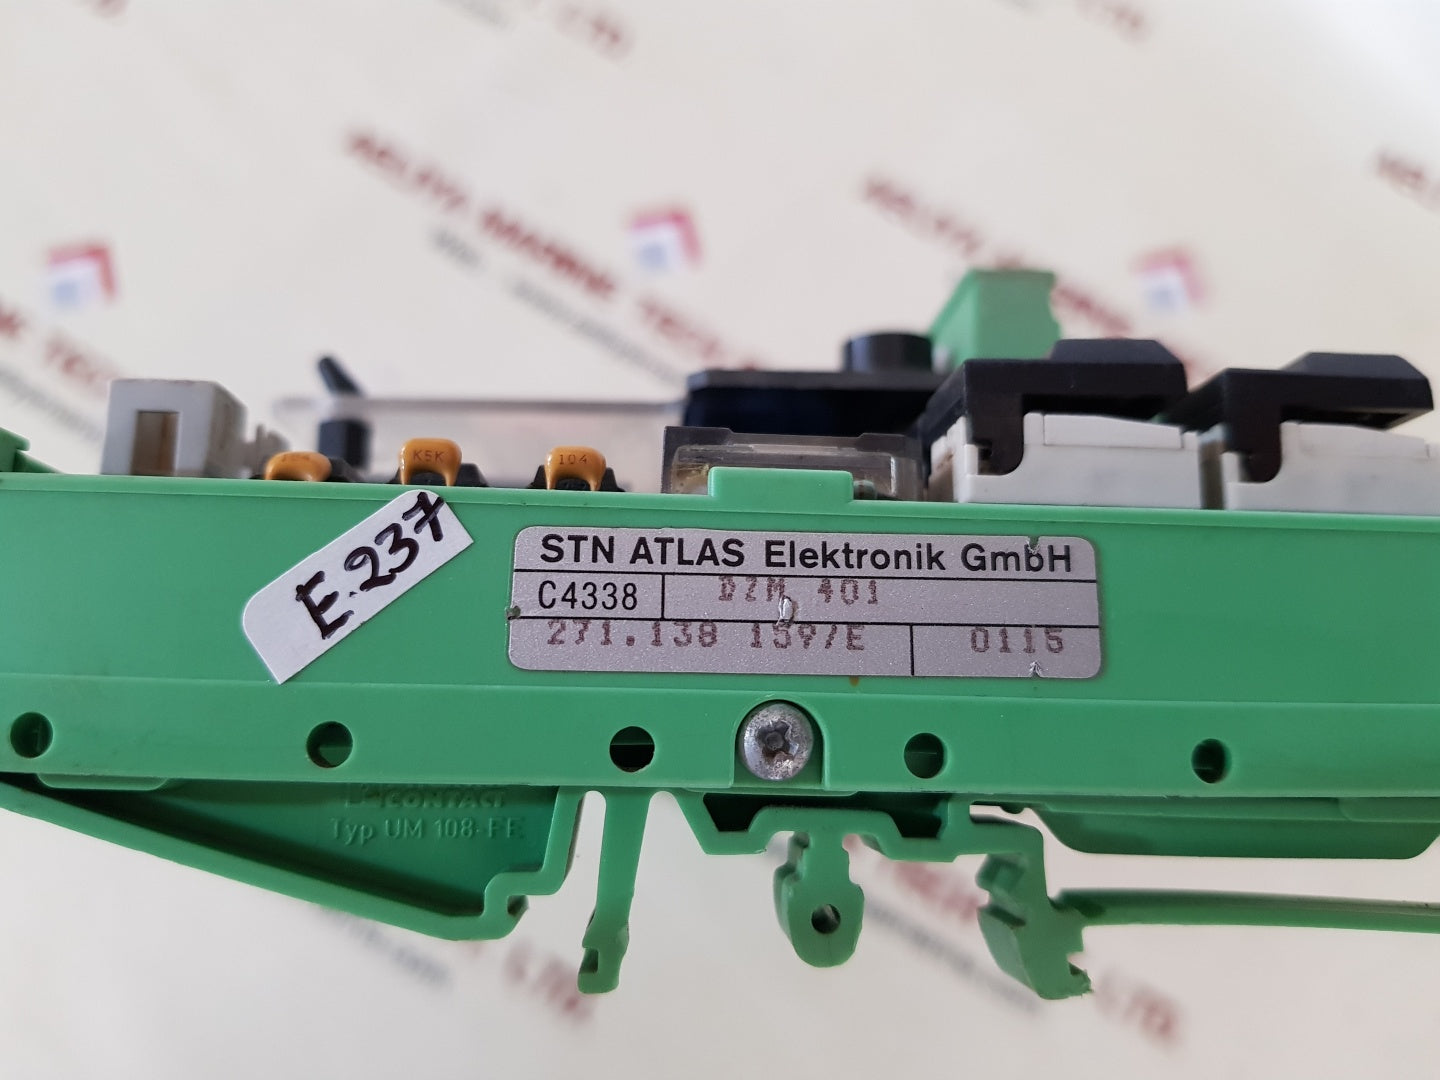 Stn atlas dzm401 speedrelay module 271.138 159/e